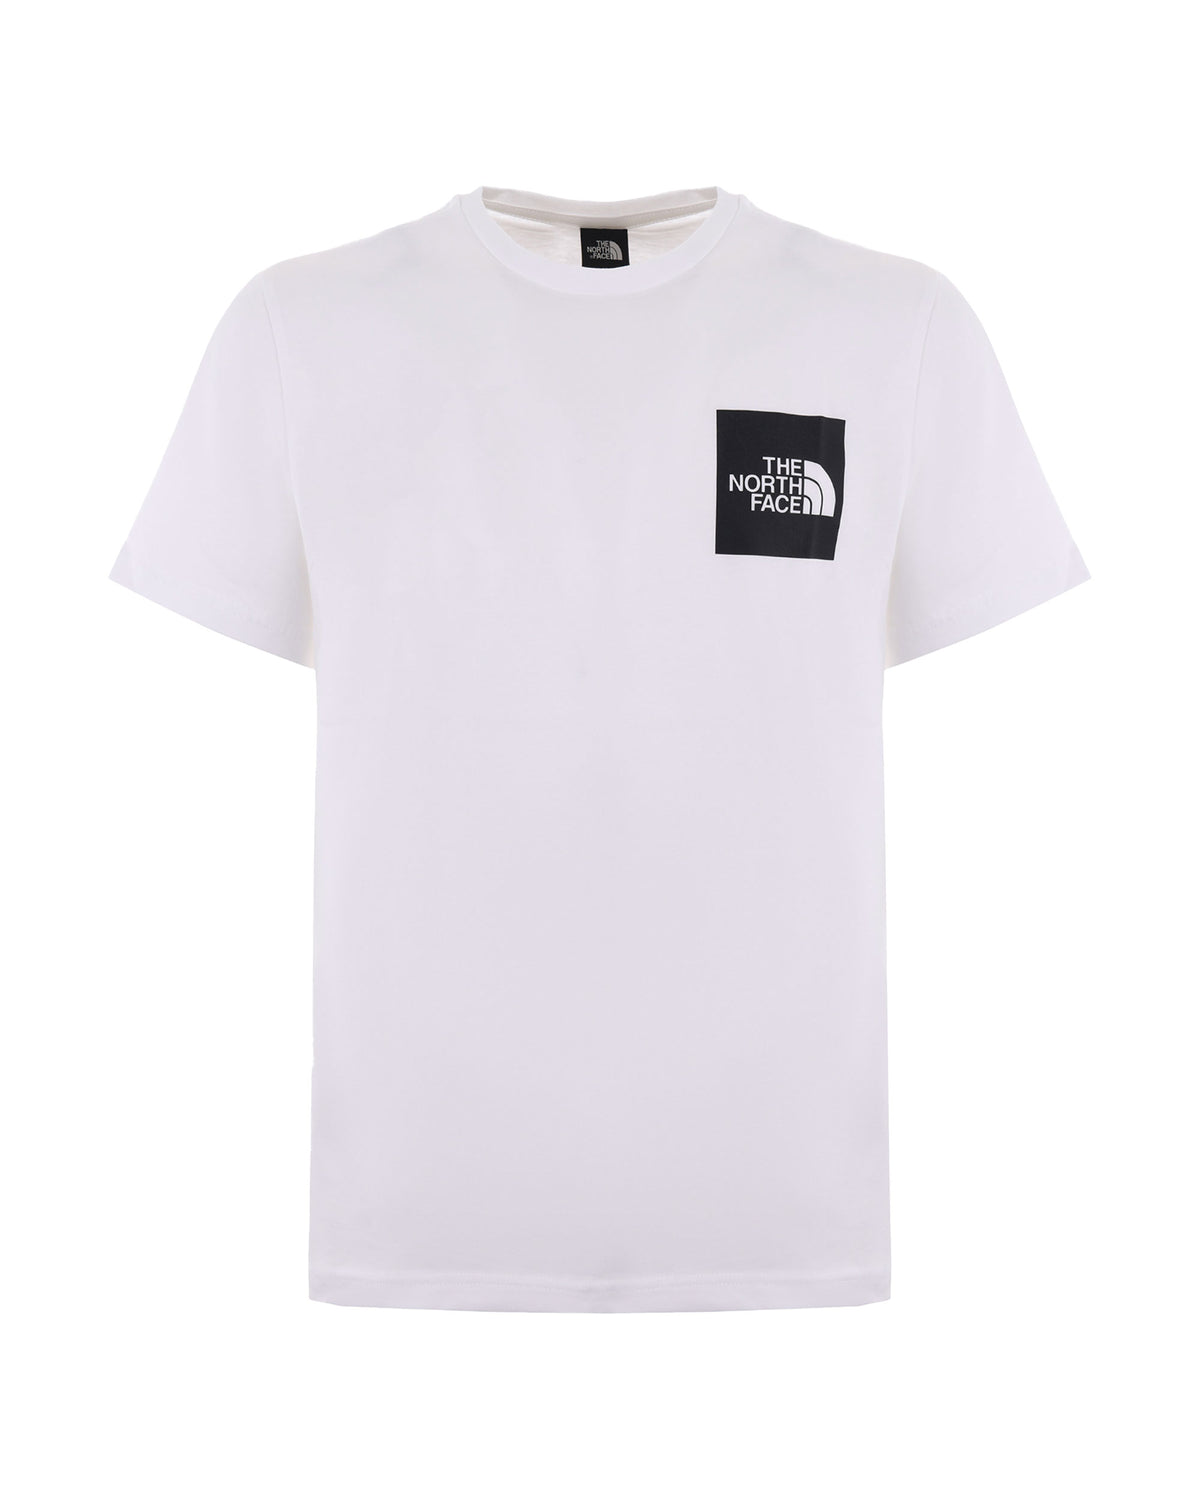 T-Shirt Uomo The North Face Box Logo Bianco